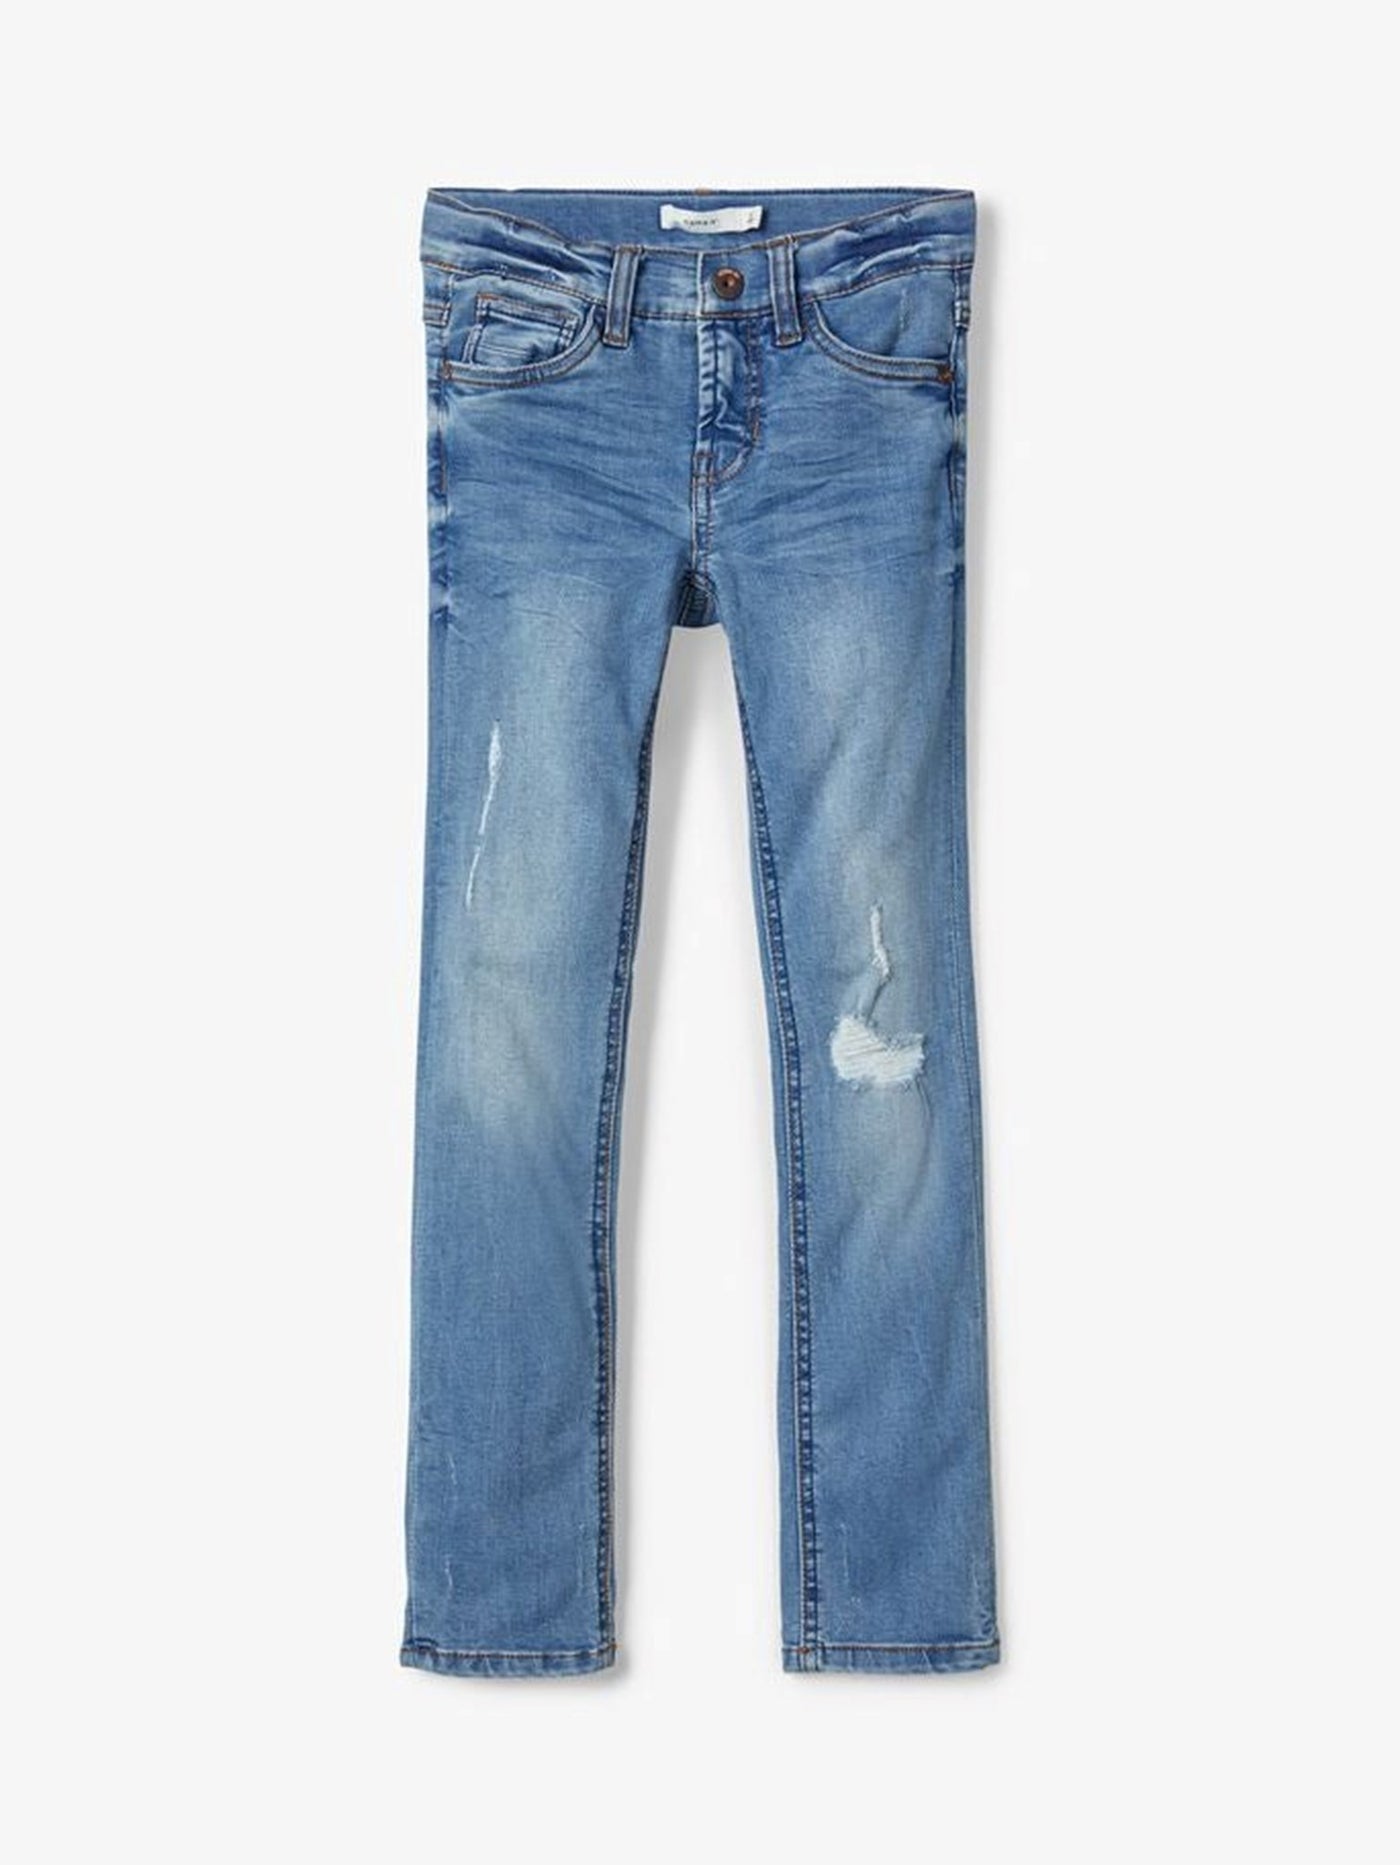 X-Slim Fit Ripped Jeans - Light Blue Denim - Name It